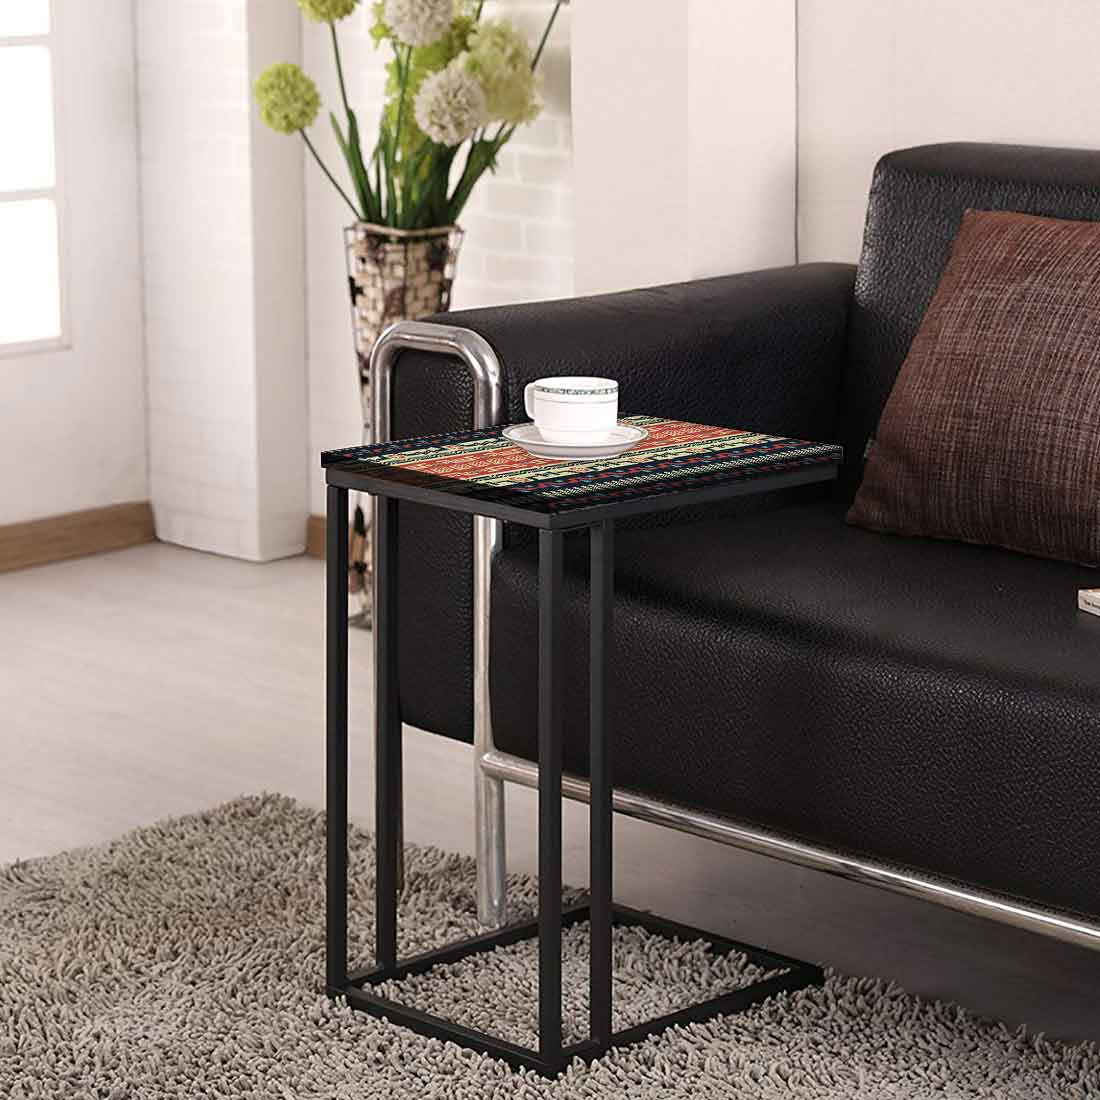 Black C Shaped Table For Sofa - Ethnic Design Nutcase